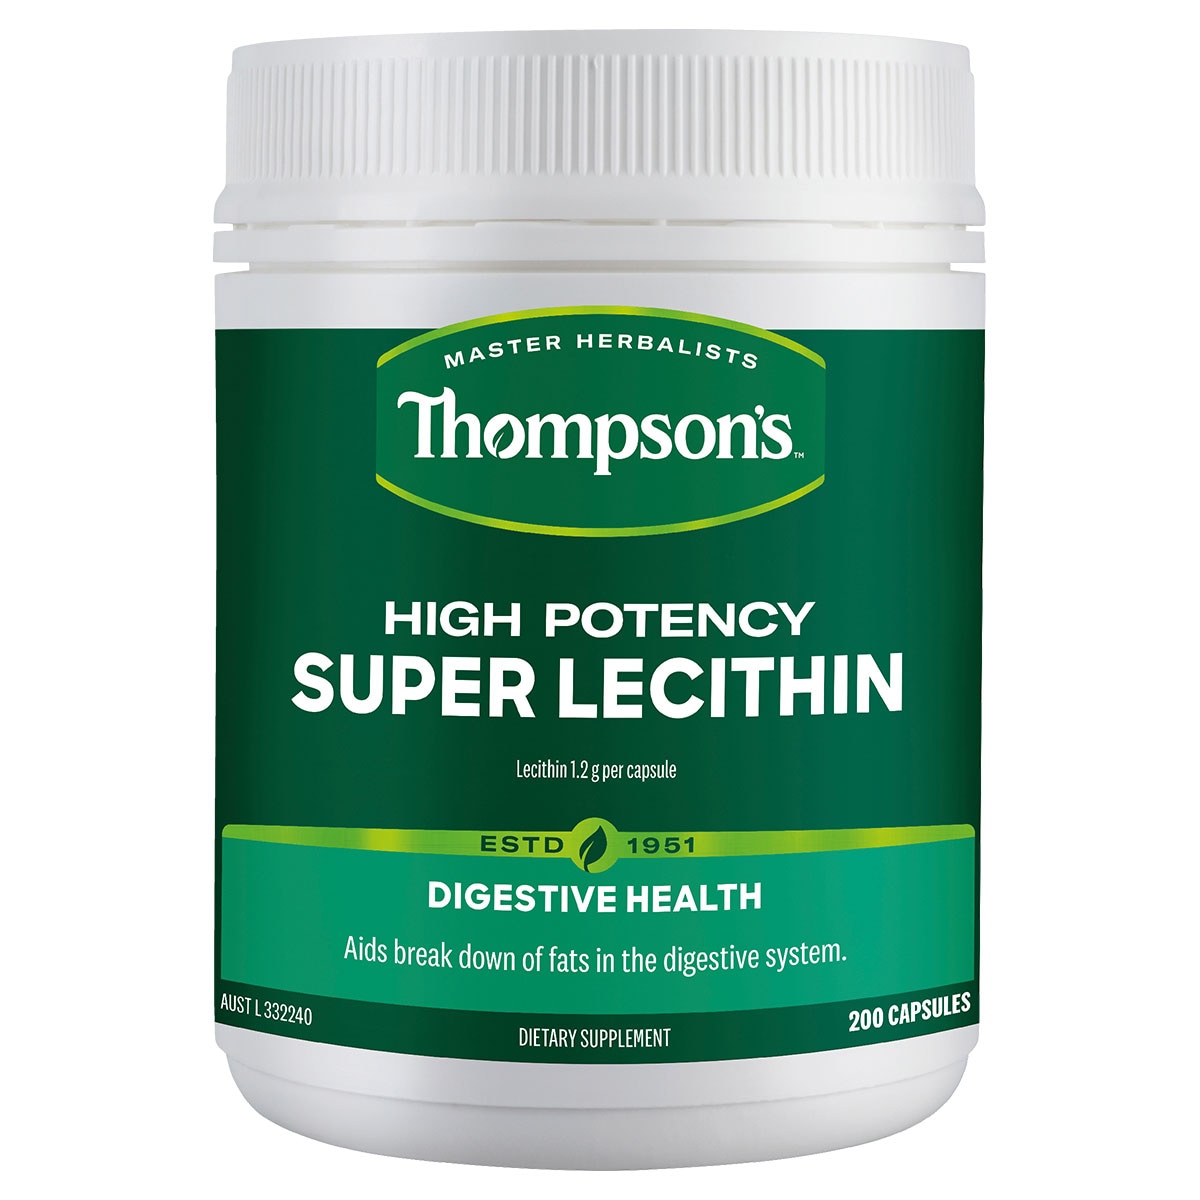 Thompsons Super Lecithin High Potency 200 Capsules Australia